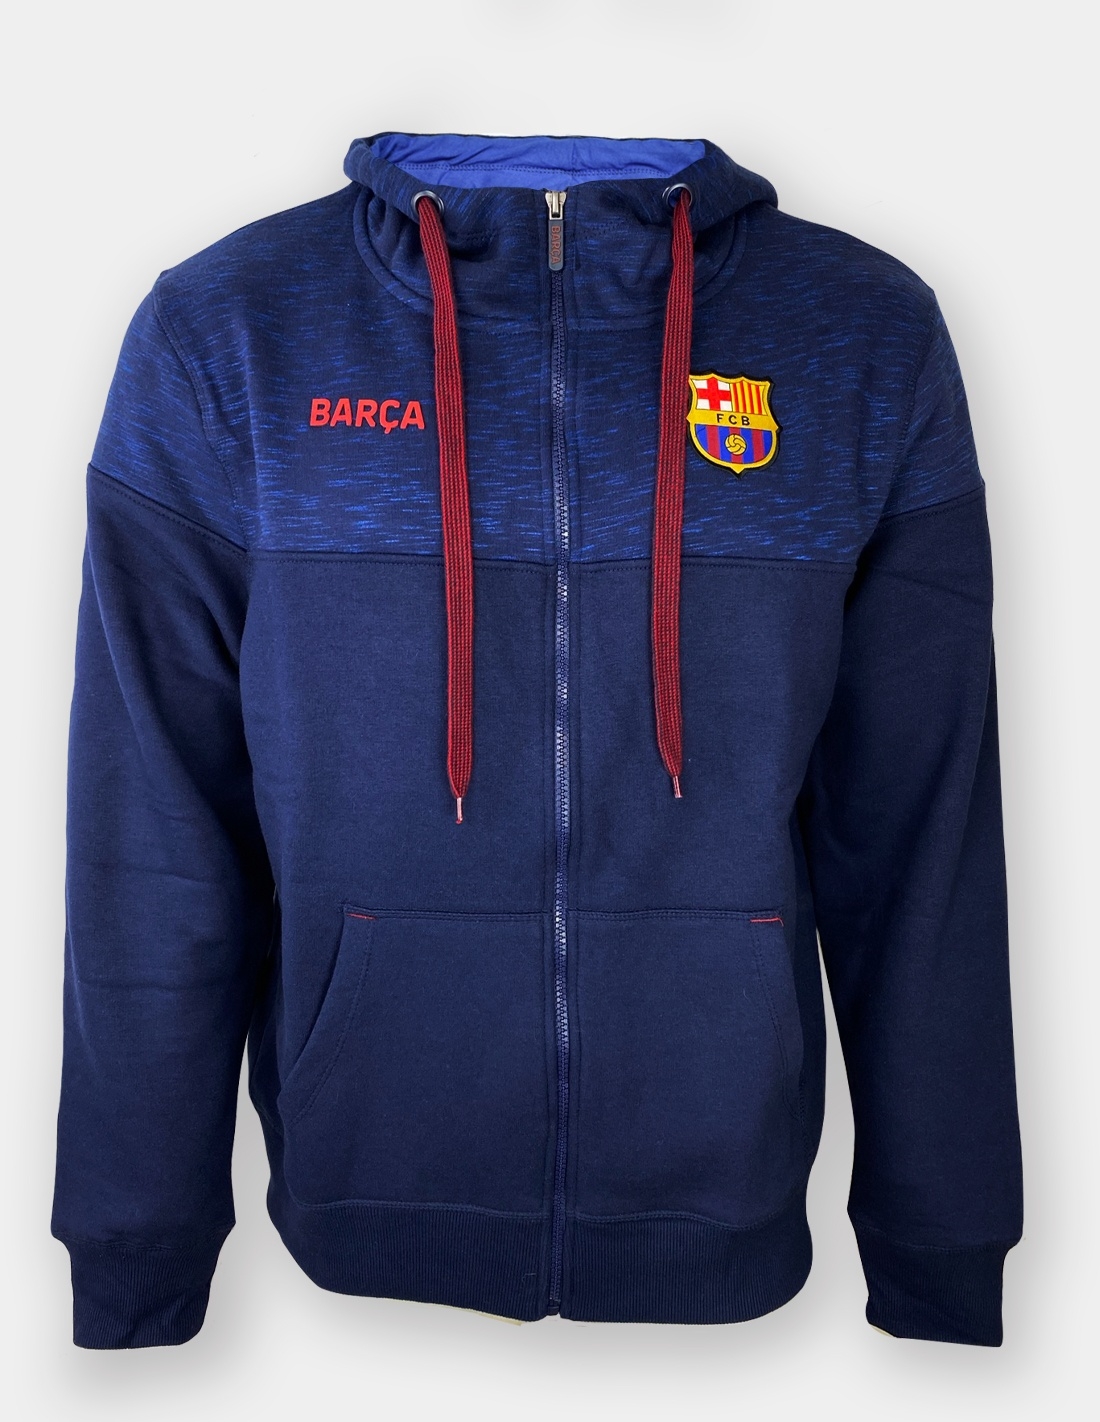 con Fútbol Club Barcelona - Producto Oficial Talla S Azul marino